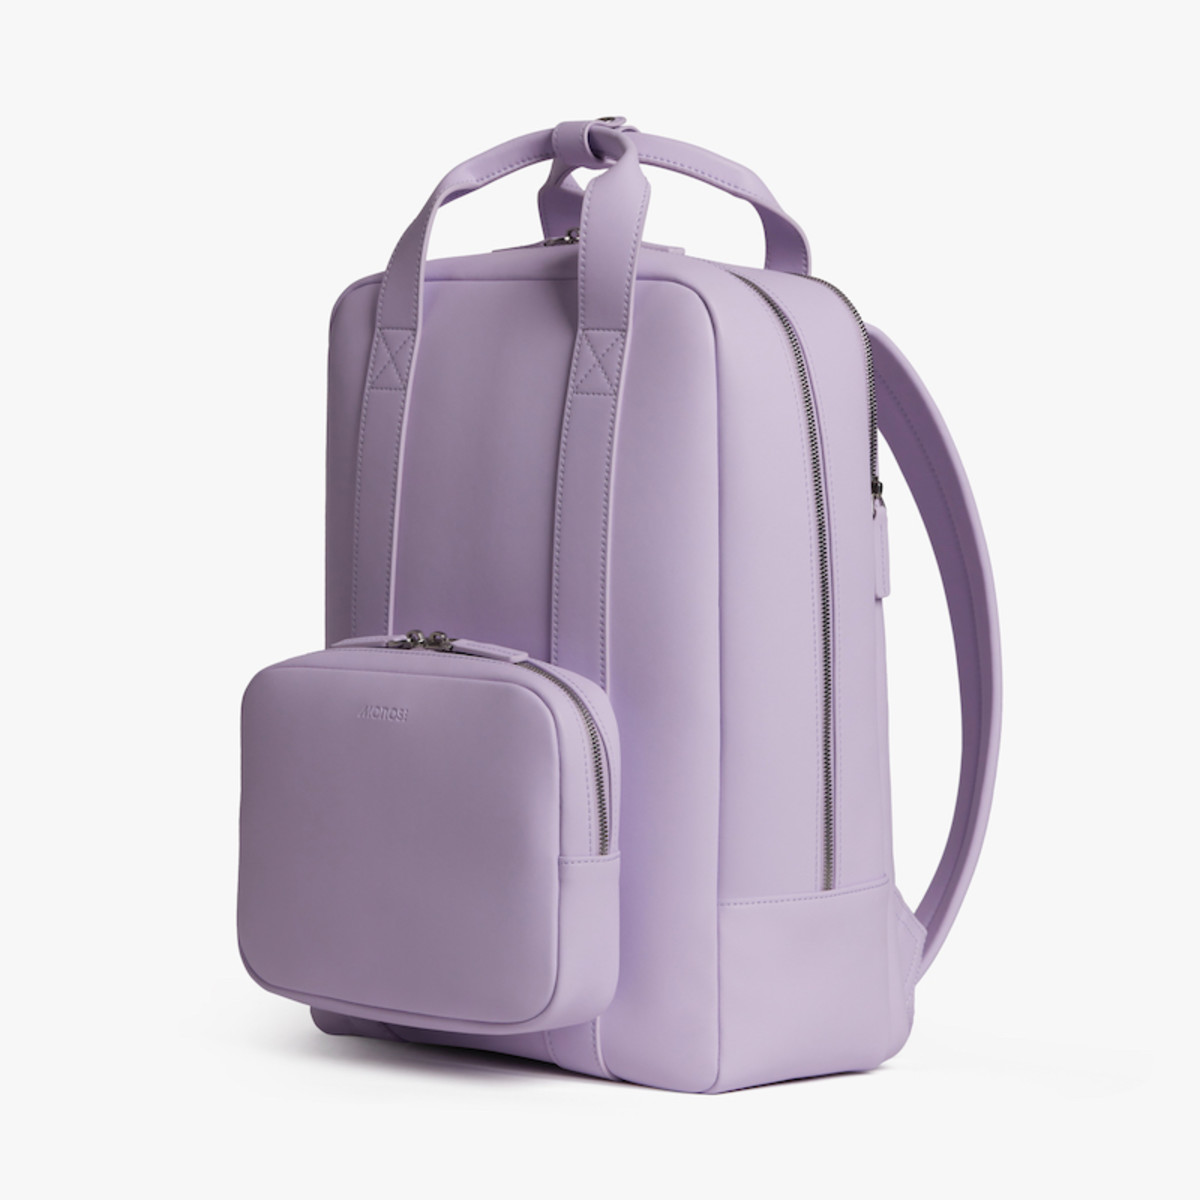 X-Bag Metro Backpack, Travel Bags